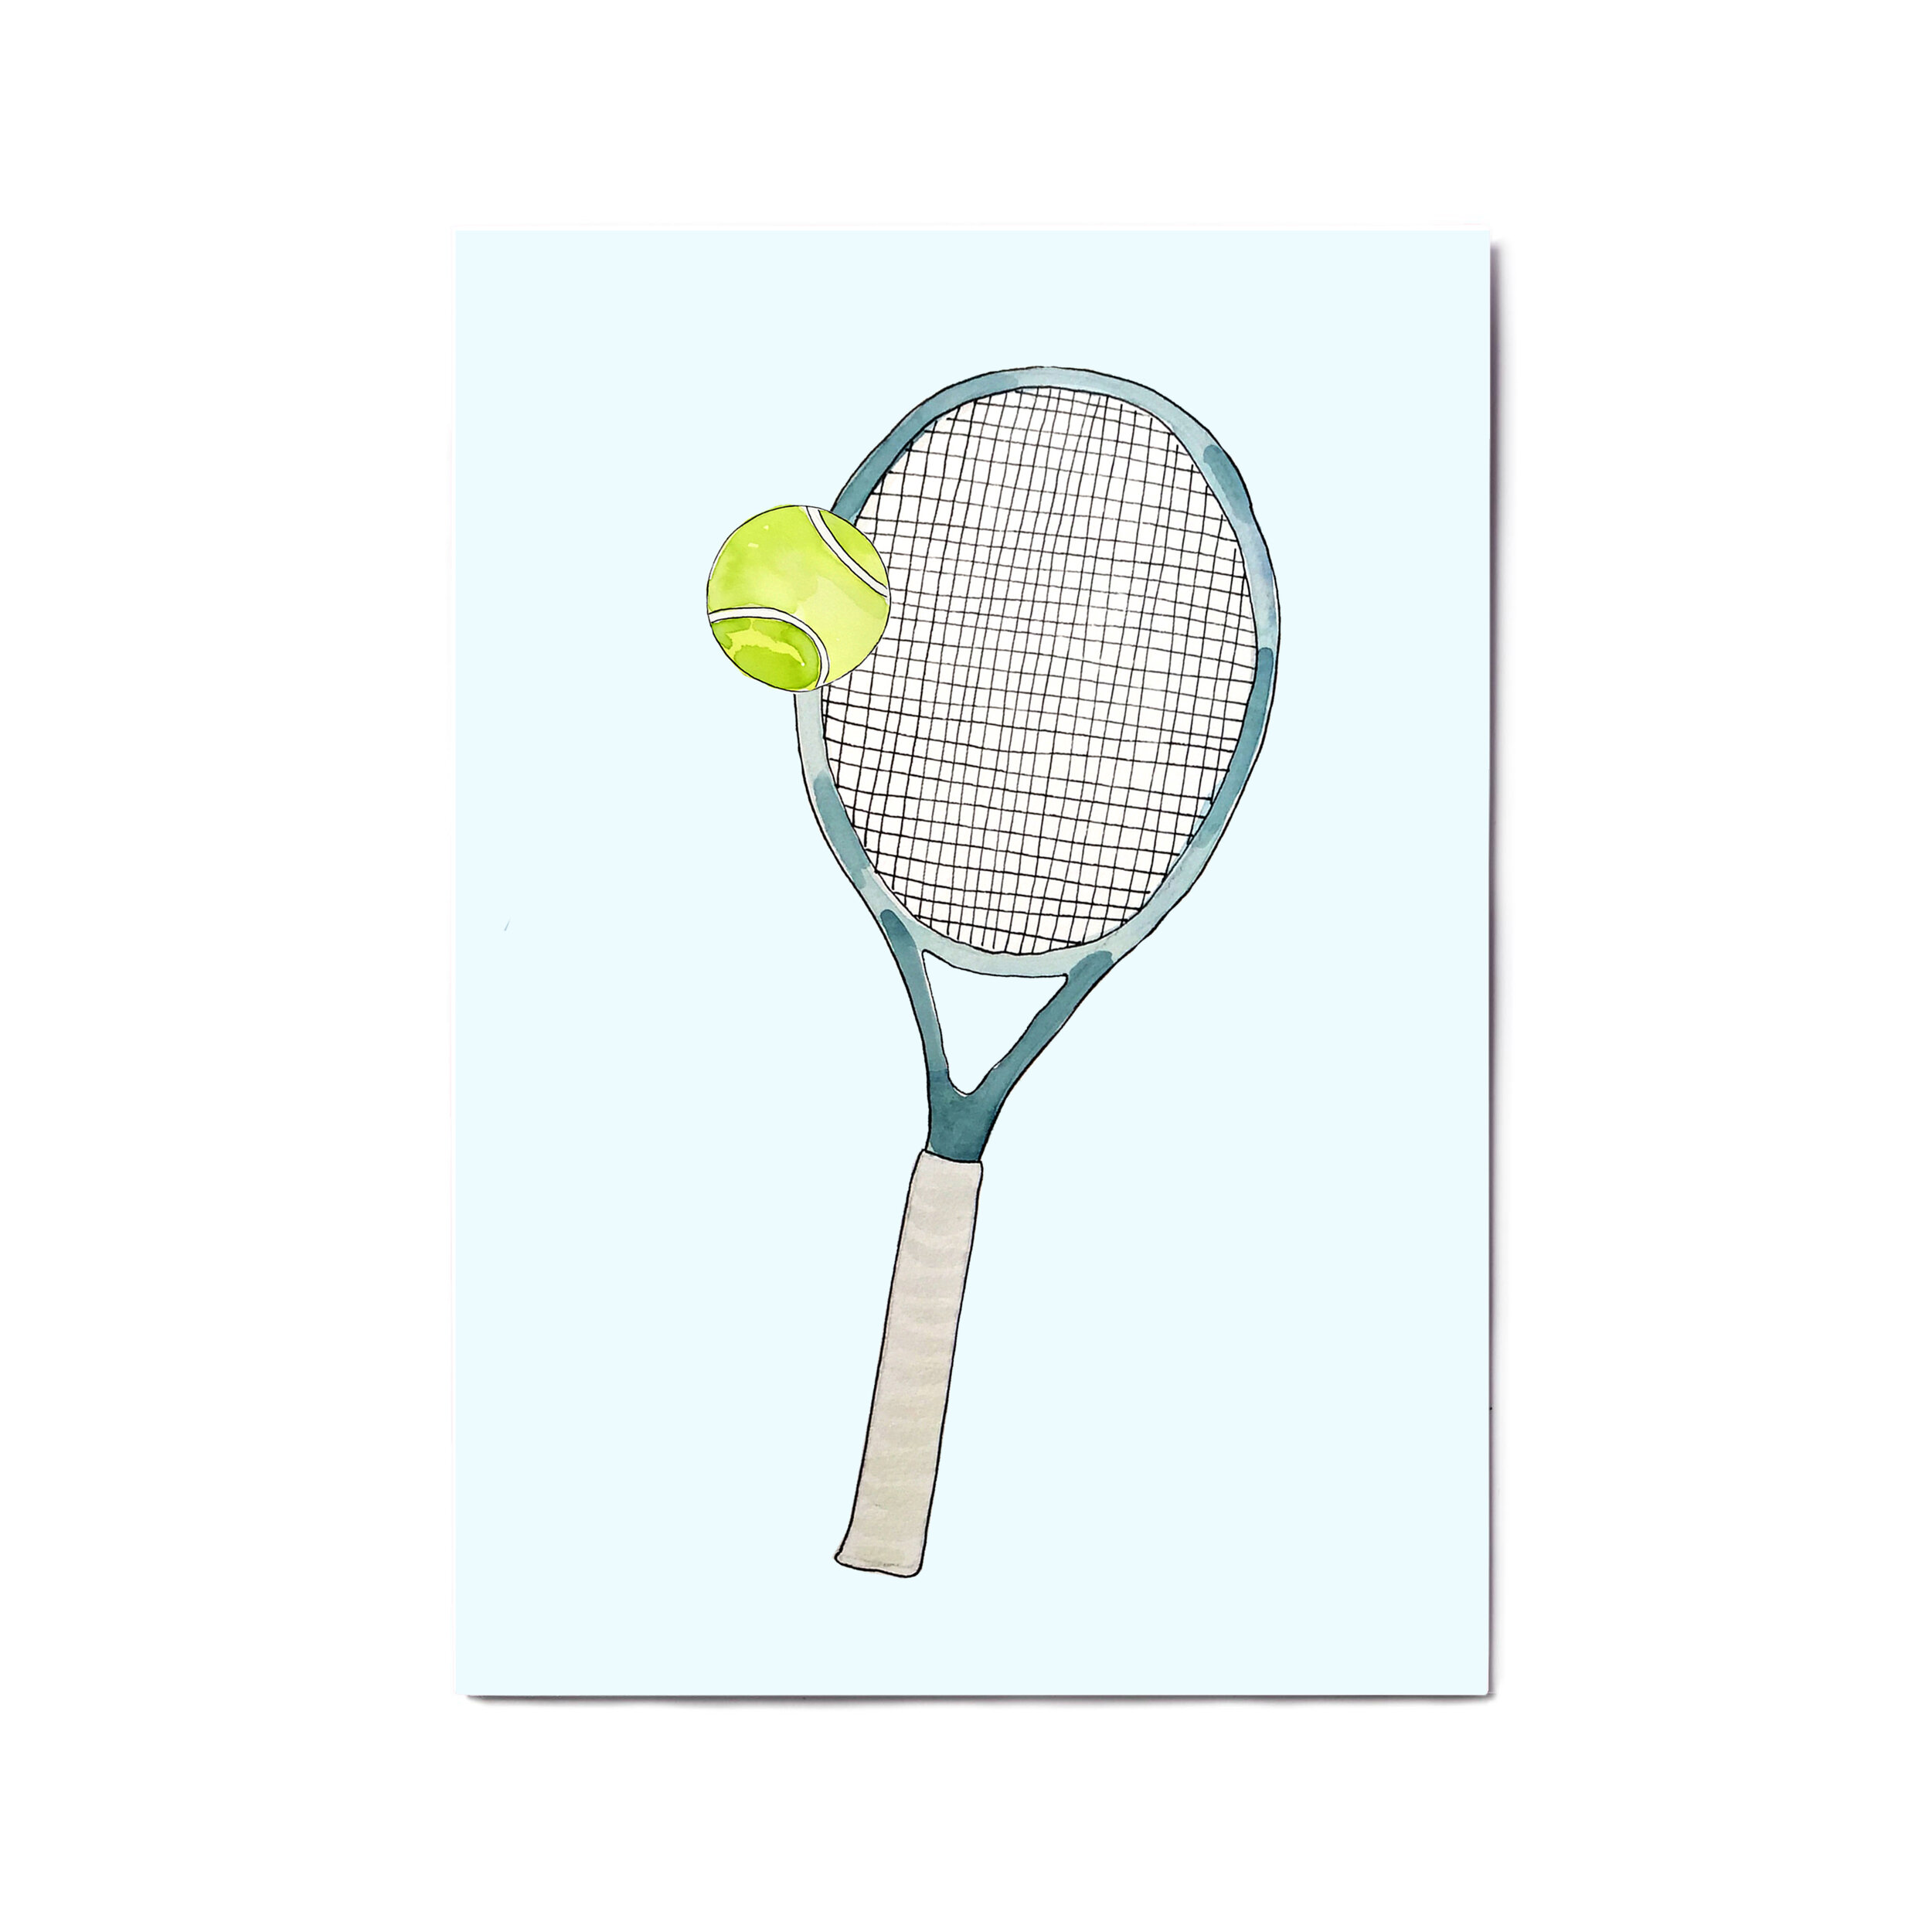 turnball racket